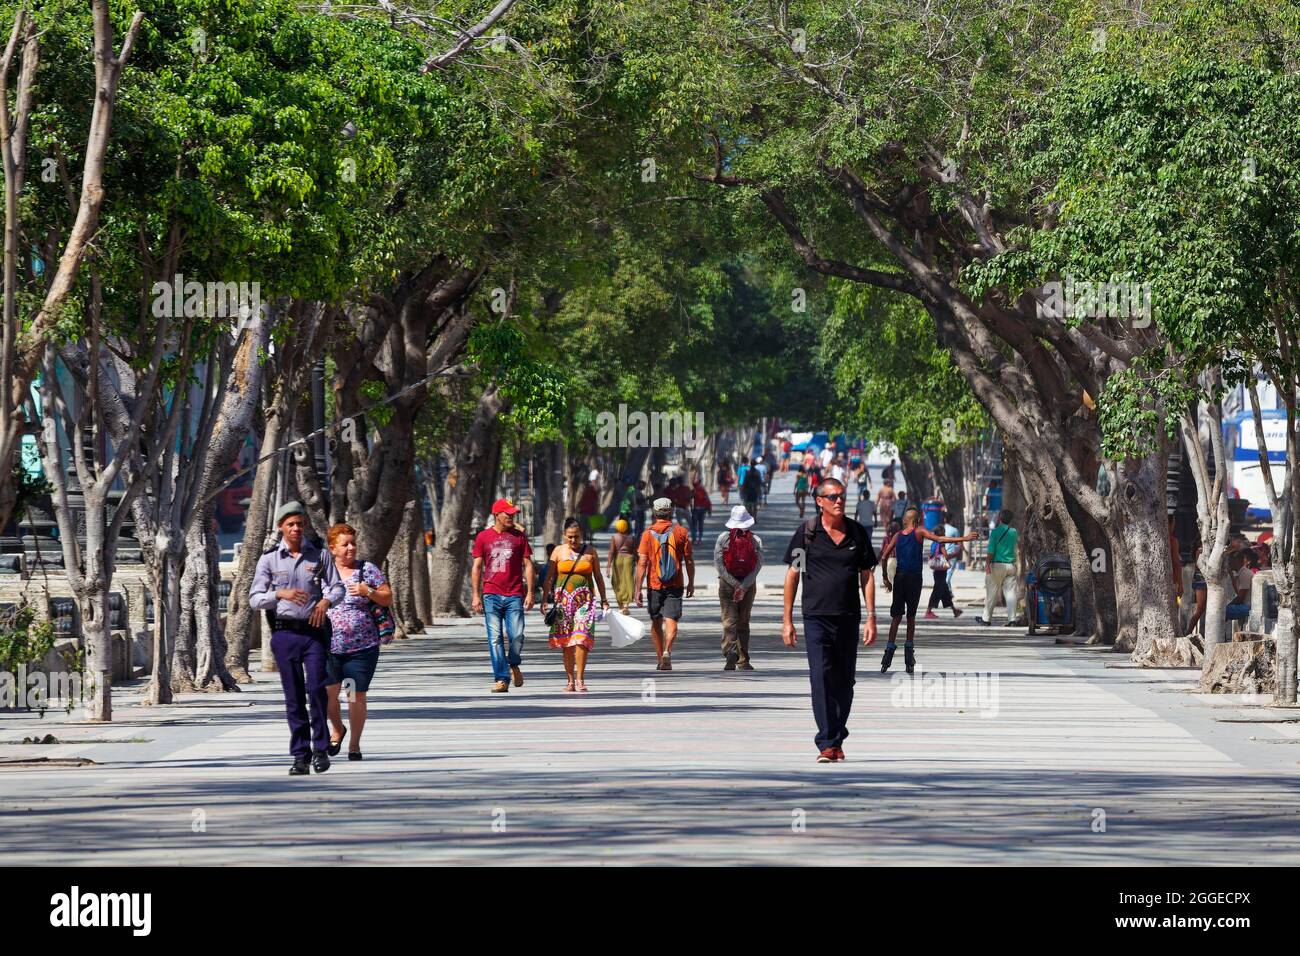 People, Cubans, strolling along Prado, avenue, capital Havana, Havana province, Greater Antilles, Caribbean, Cuba Stock Photo